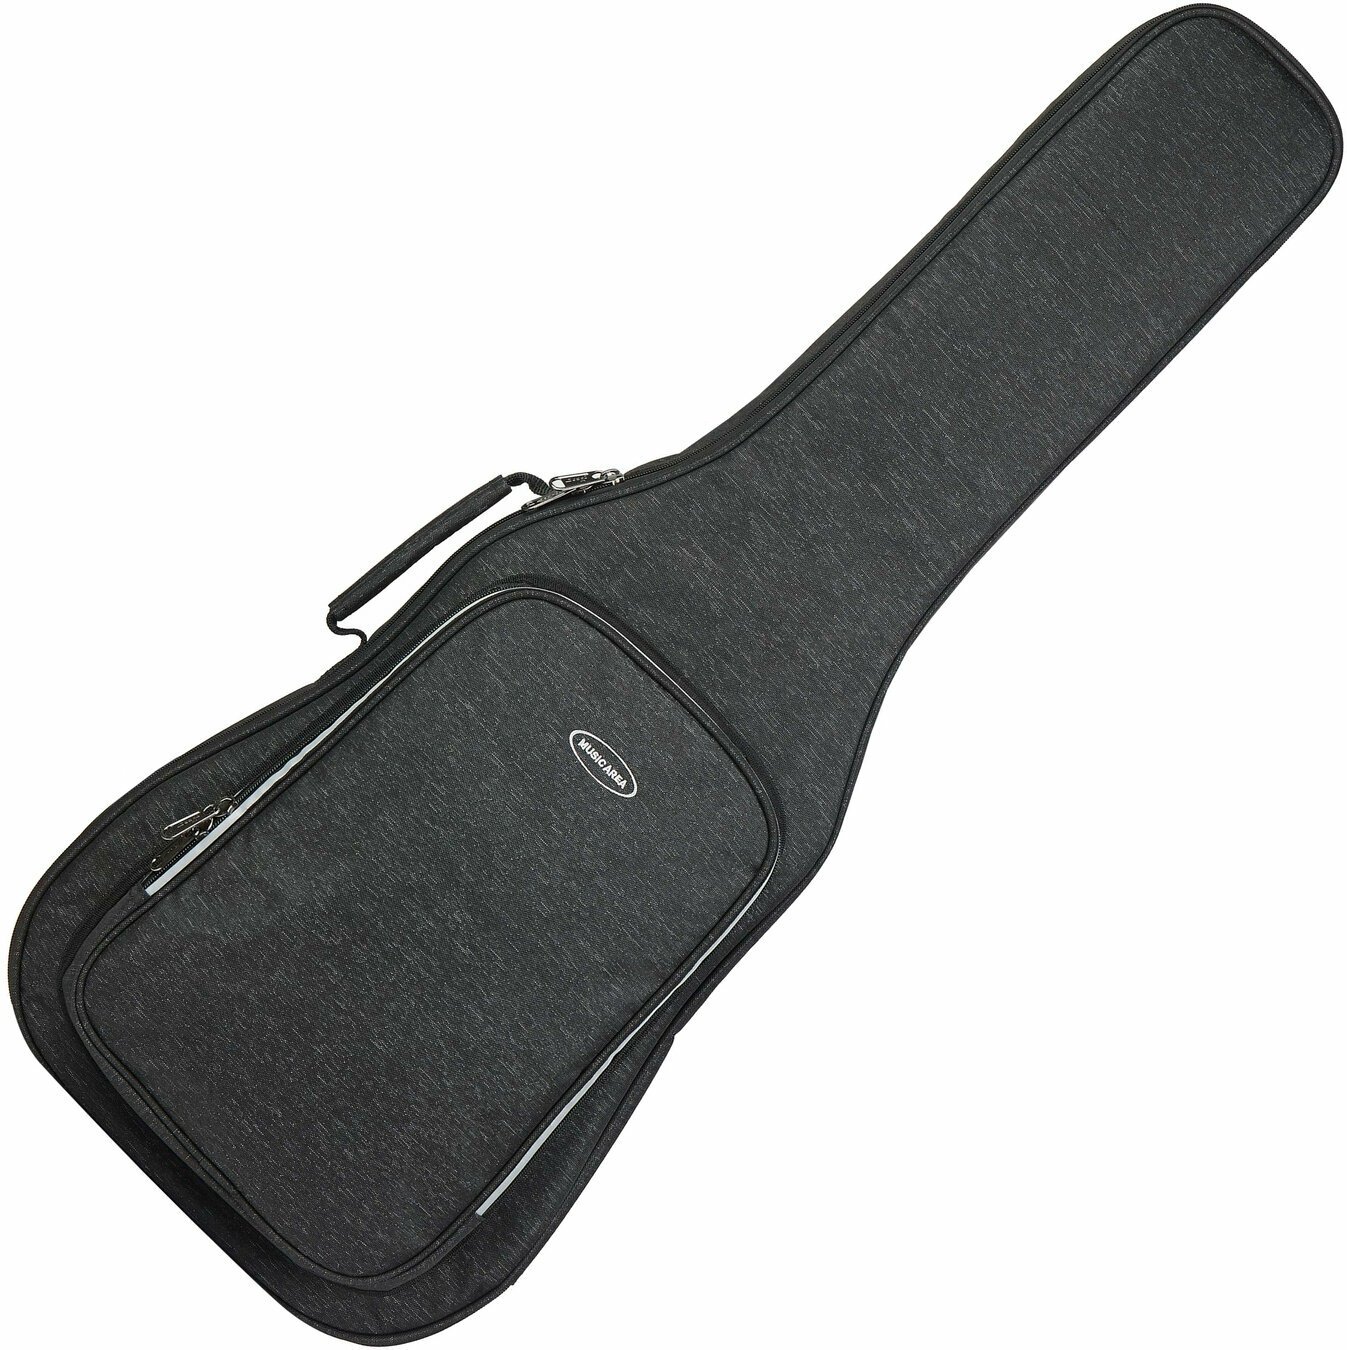 Tasche für E-Gitarre MUSIC AREA RB10 Electric Guitar Tasche für E-Gitarre Black